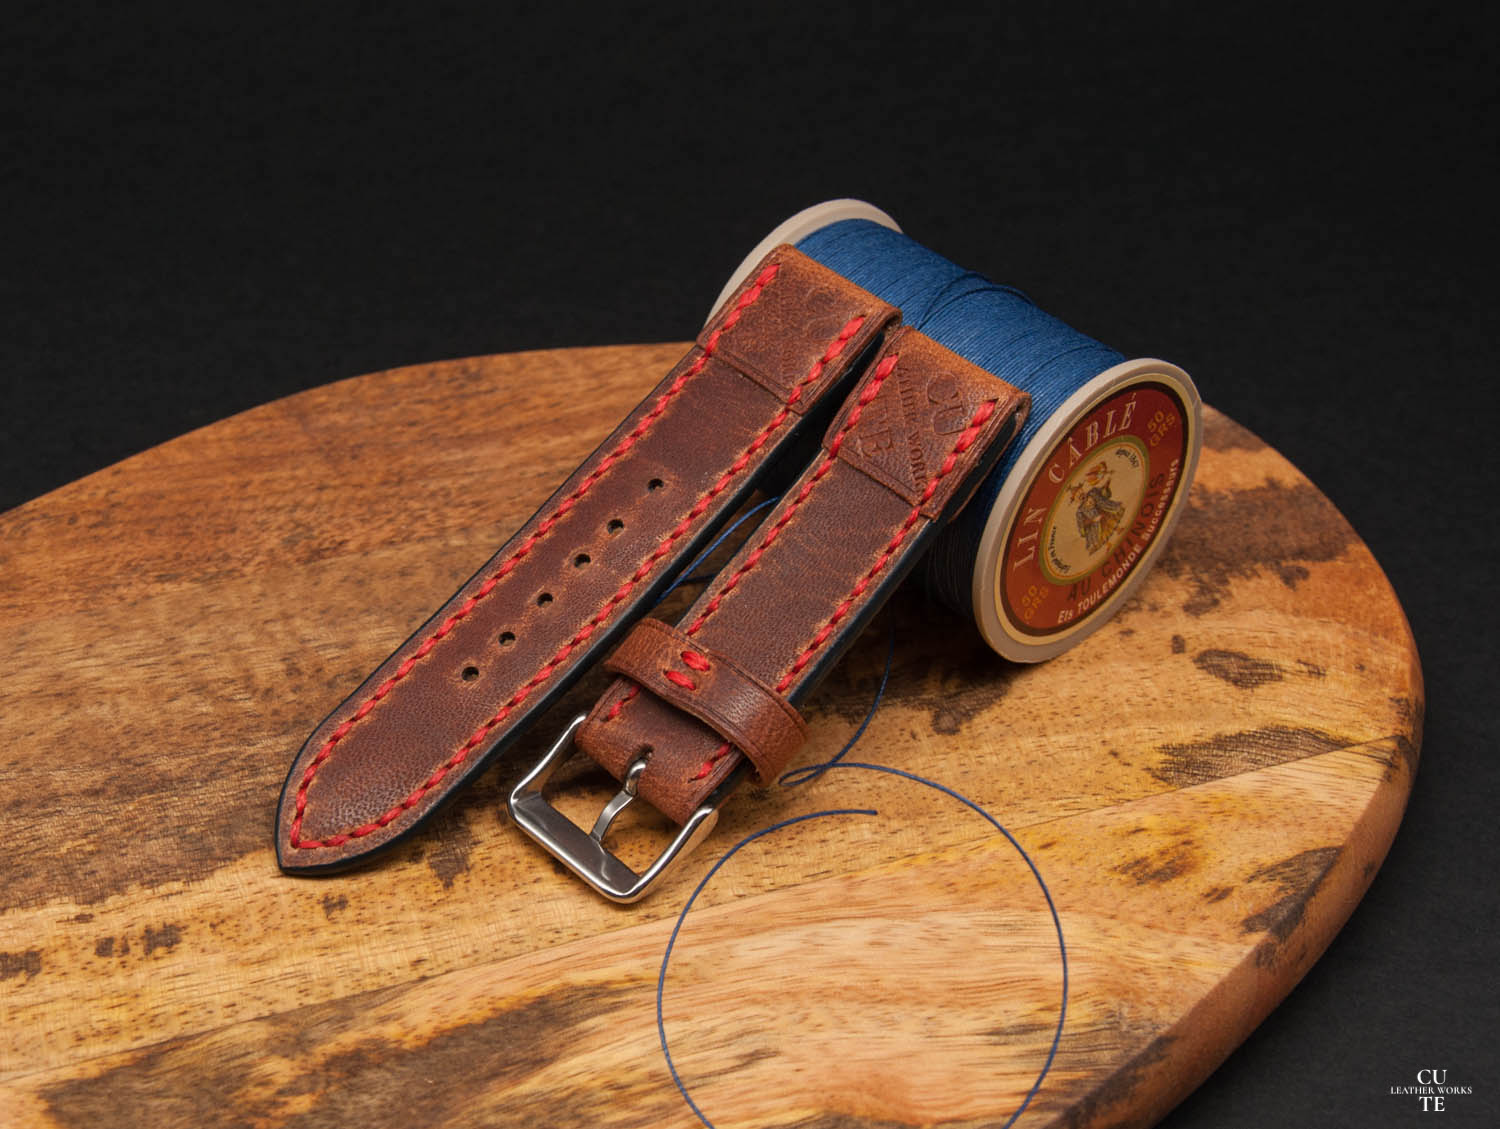 Denim Watch Band With Badalassi Leather, Handmade in Finland